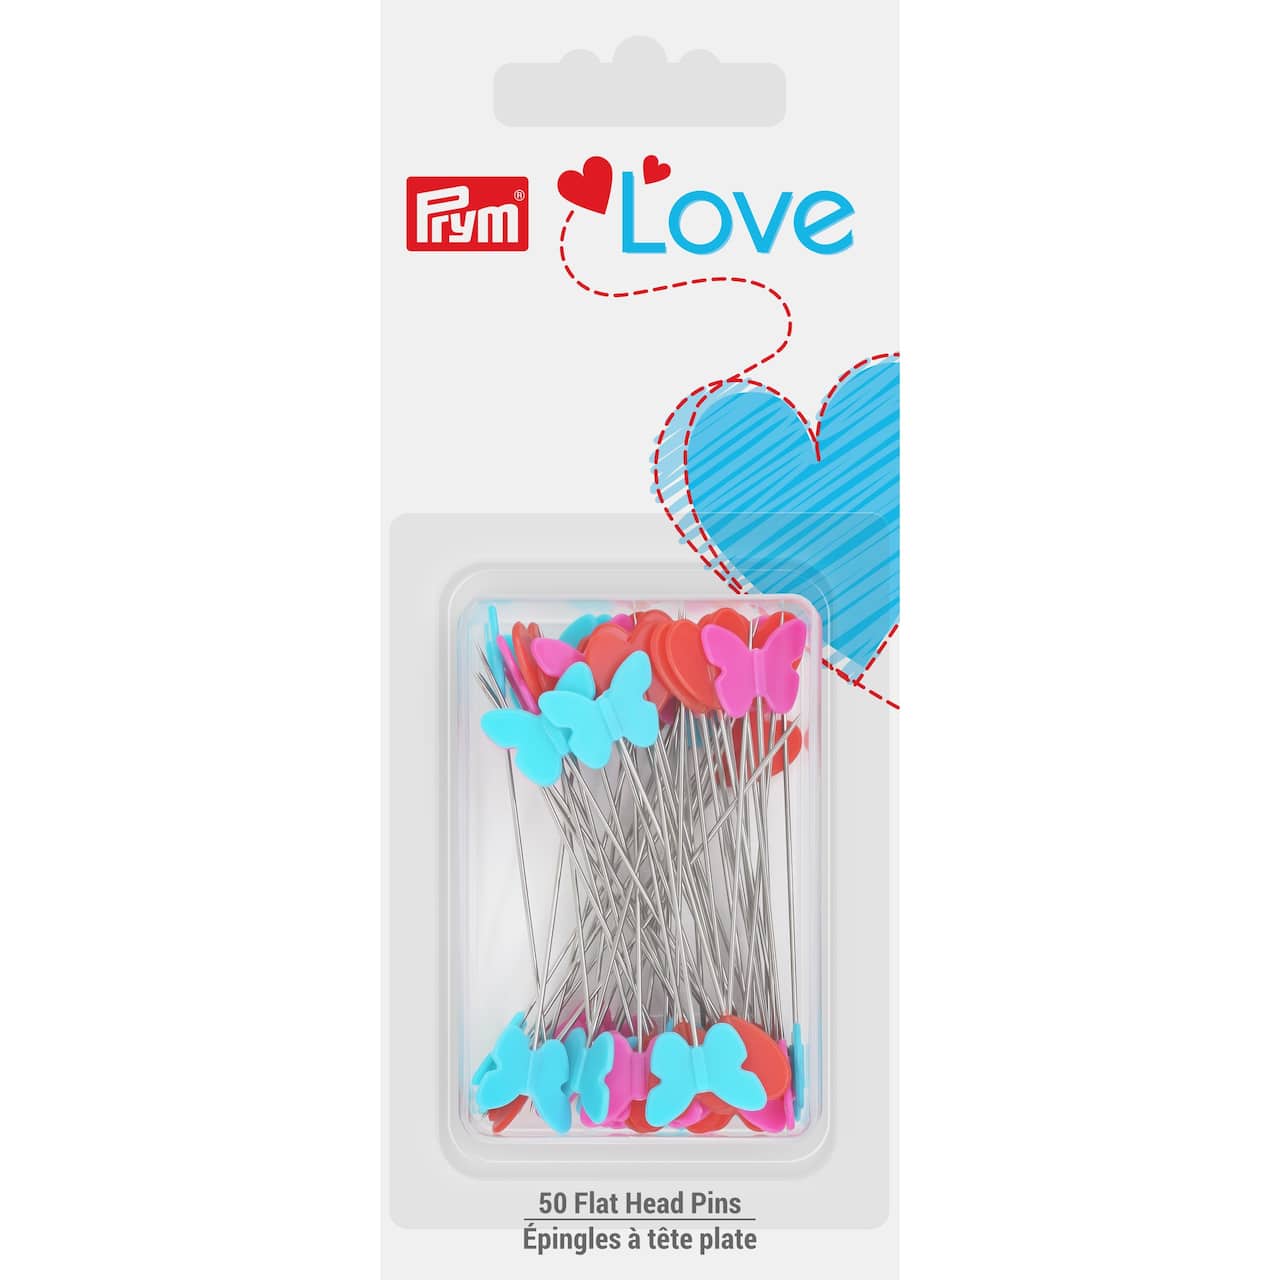 Prym® Love Flat Head Pins, 50ct.